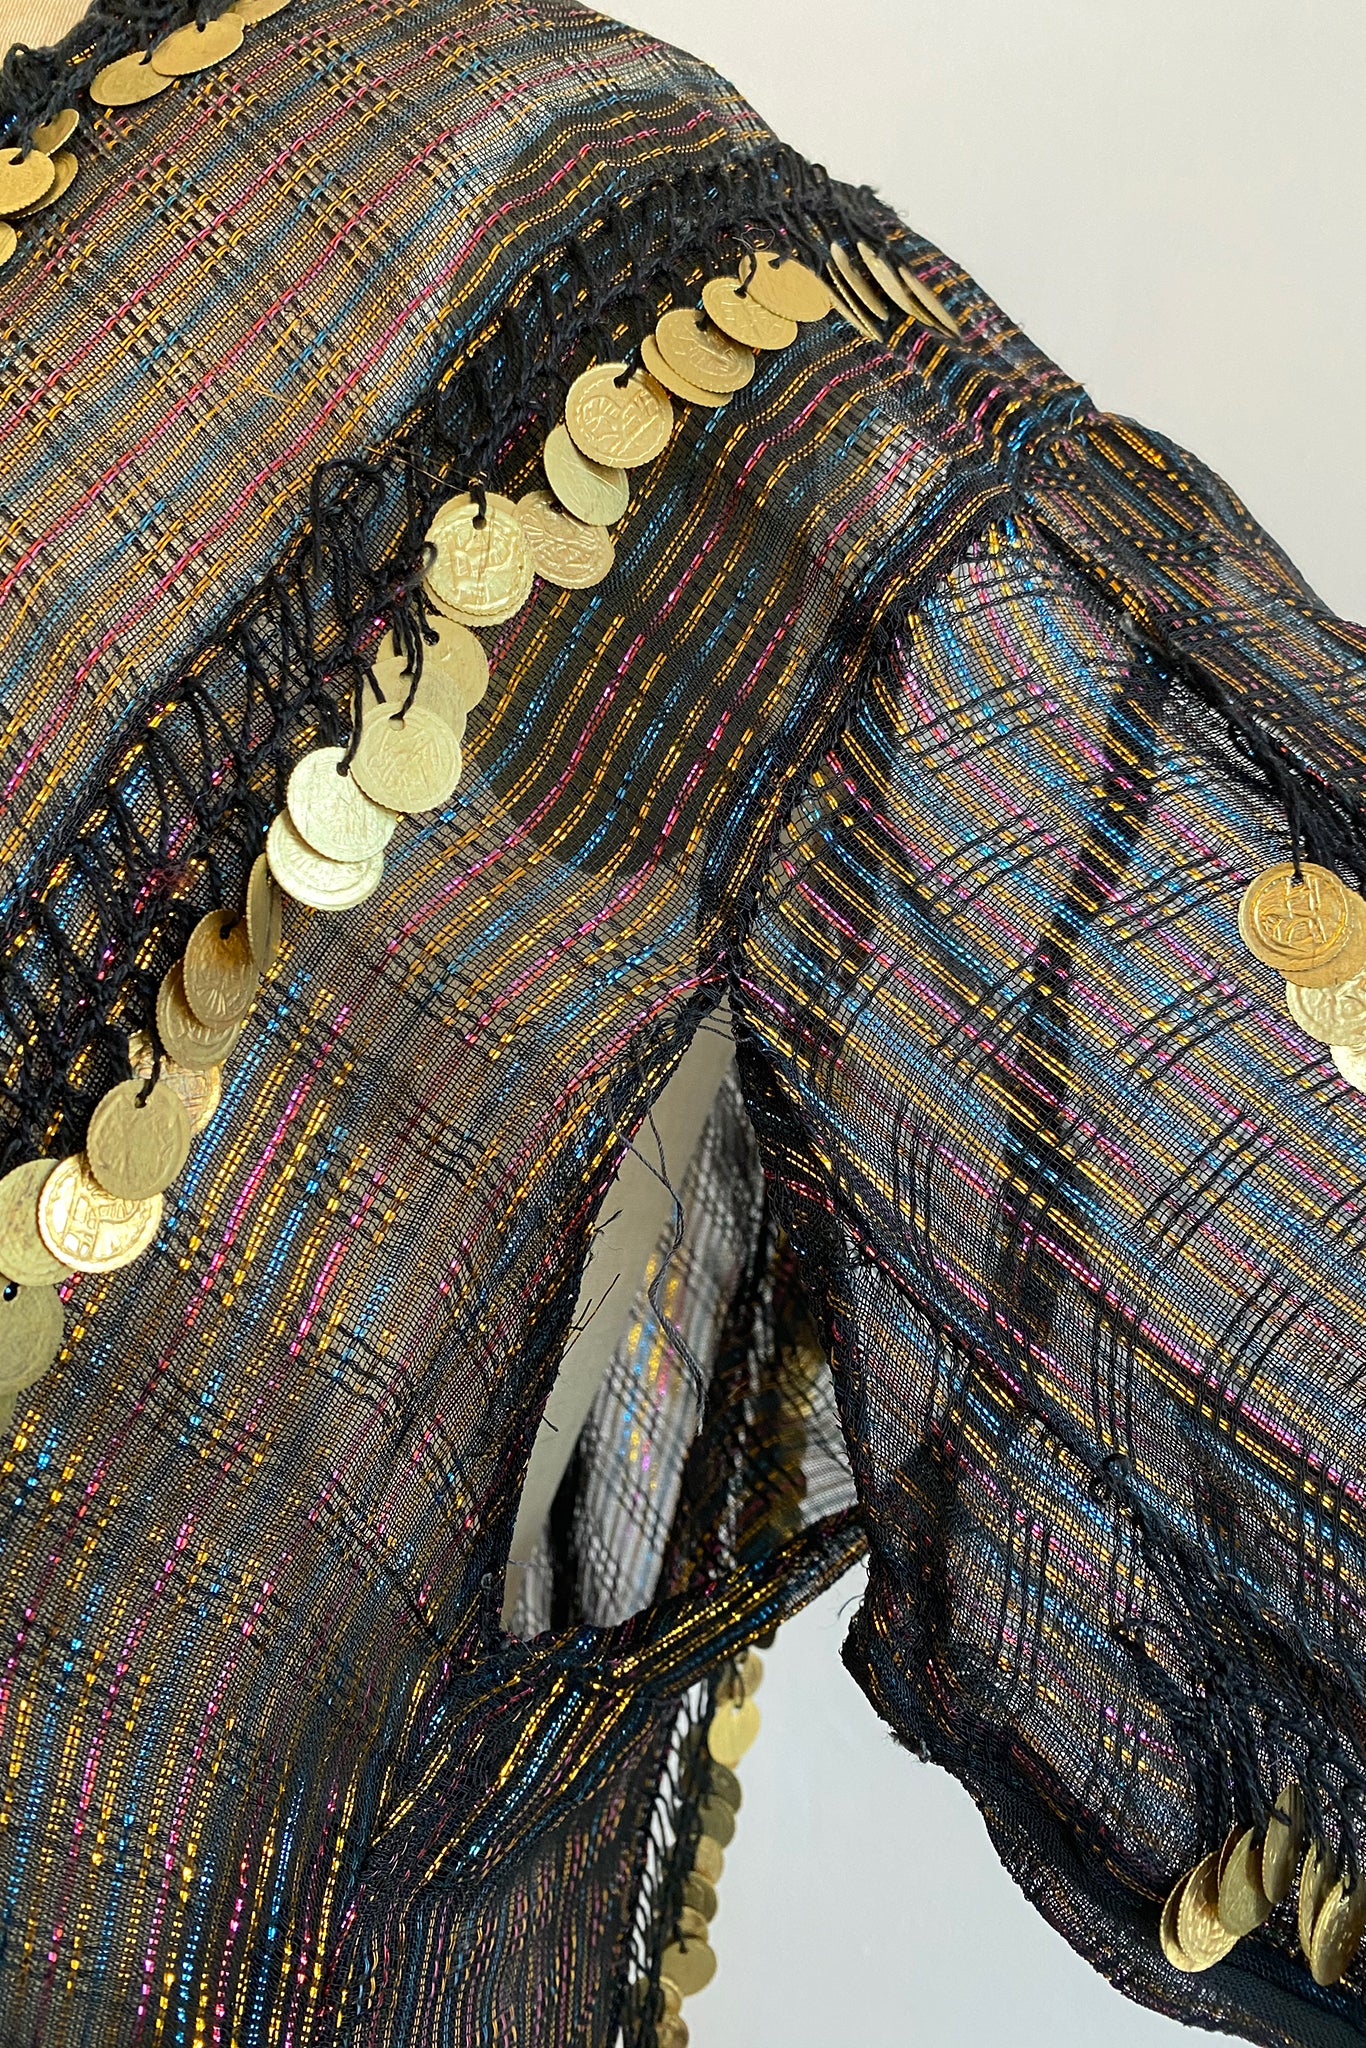 Vintage Sheer Metallic Coin Fringe Dress on Dressform Underarm Seams at Recess Los Angeles